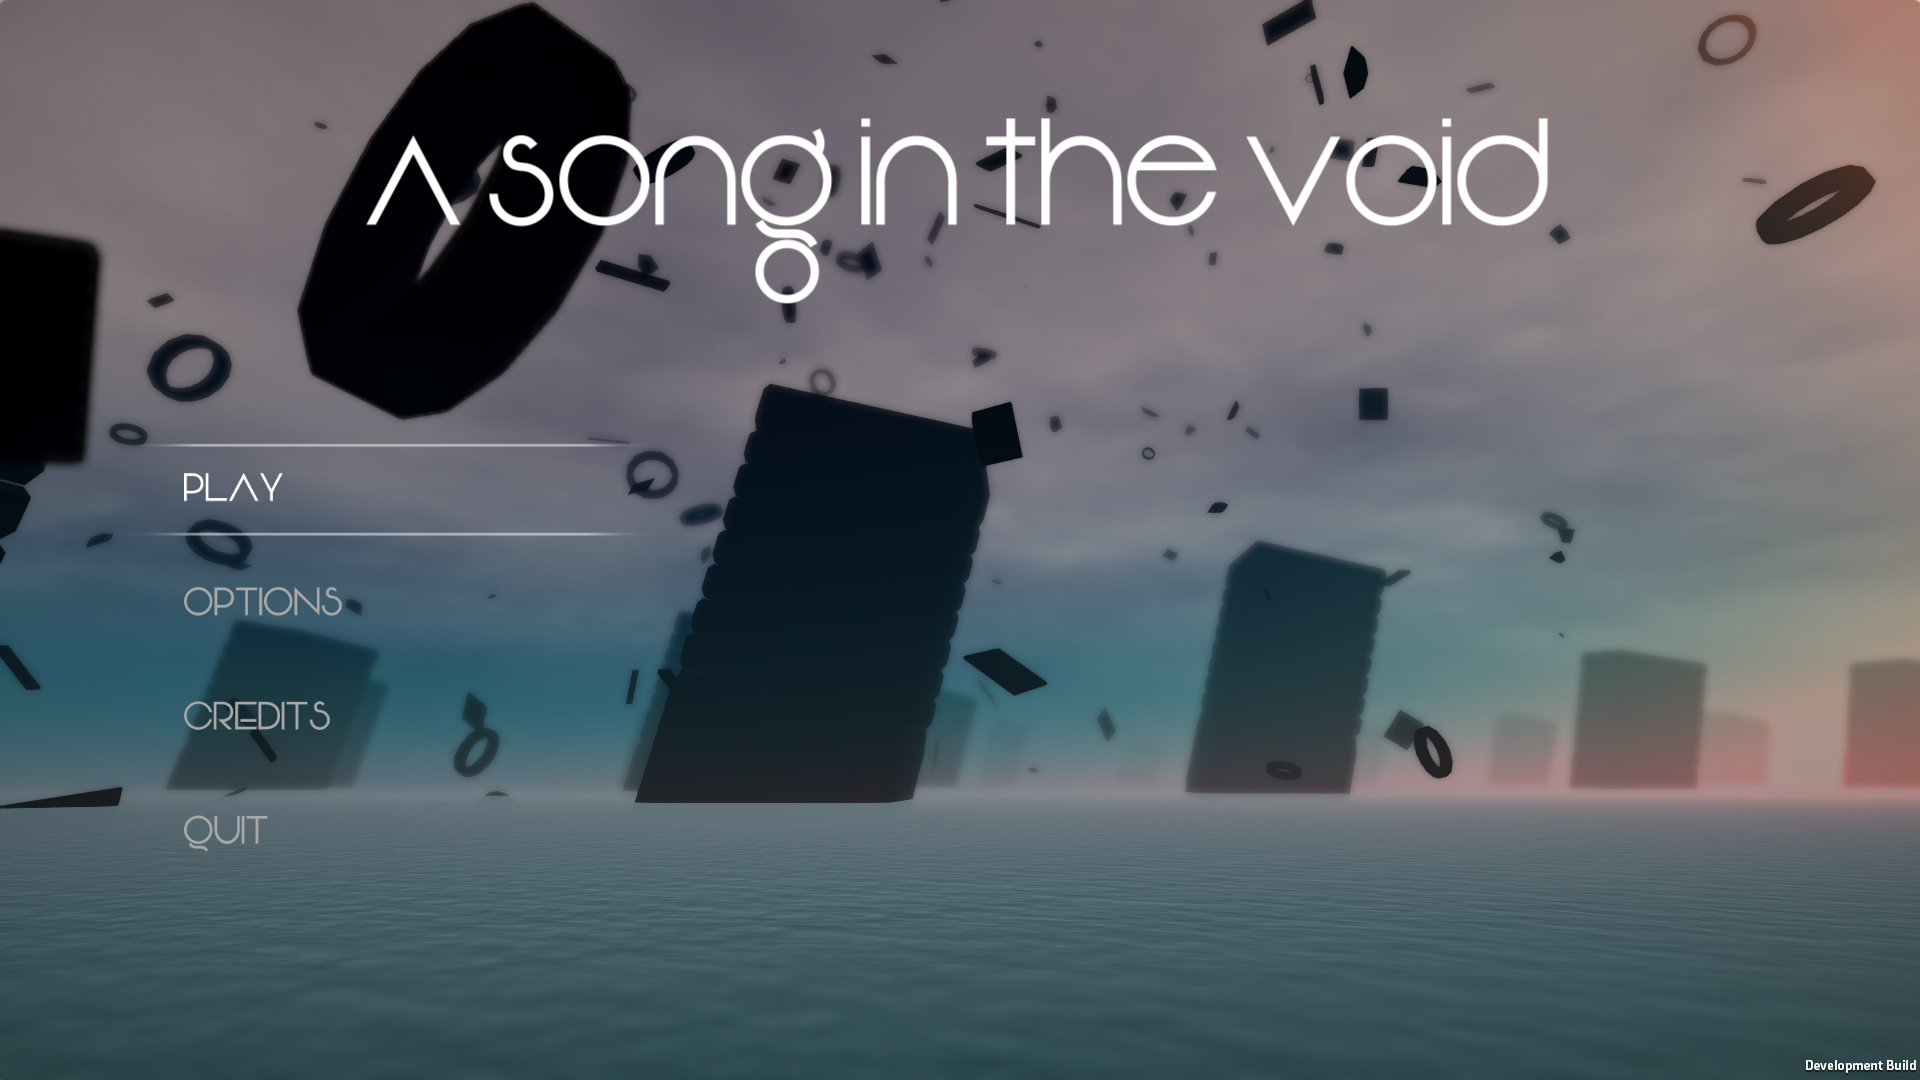 Feel the void. Voice on the Void игра. Уровень the Void. Void песня. Voices of the Void картинки.